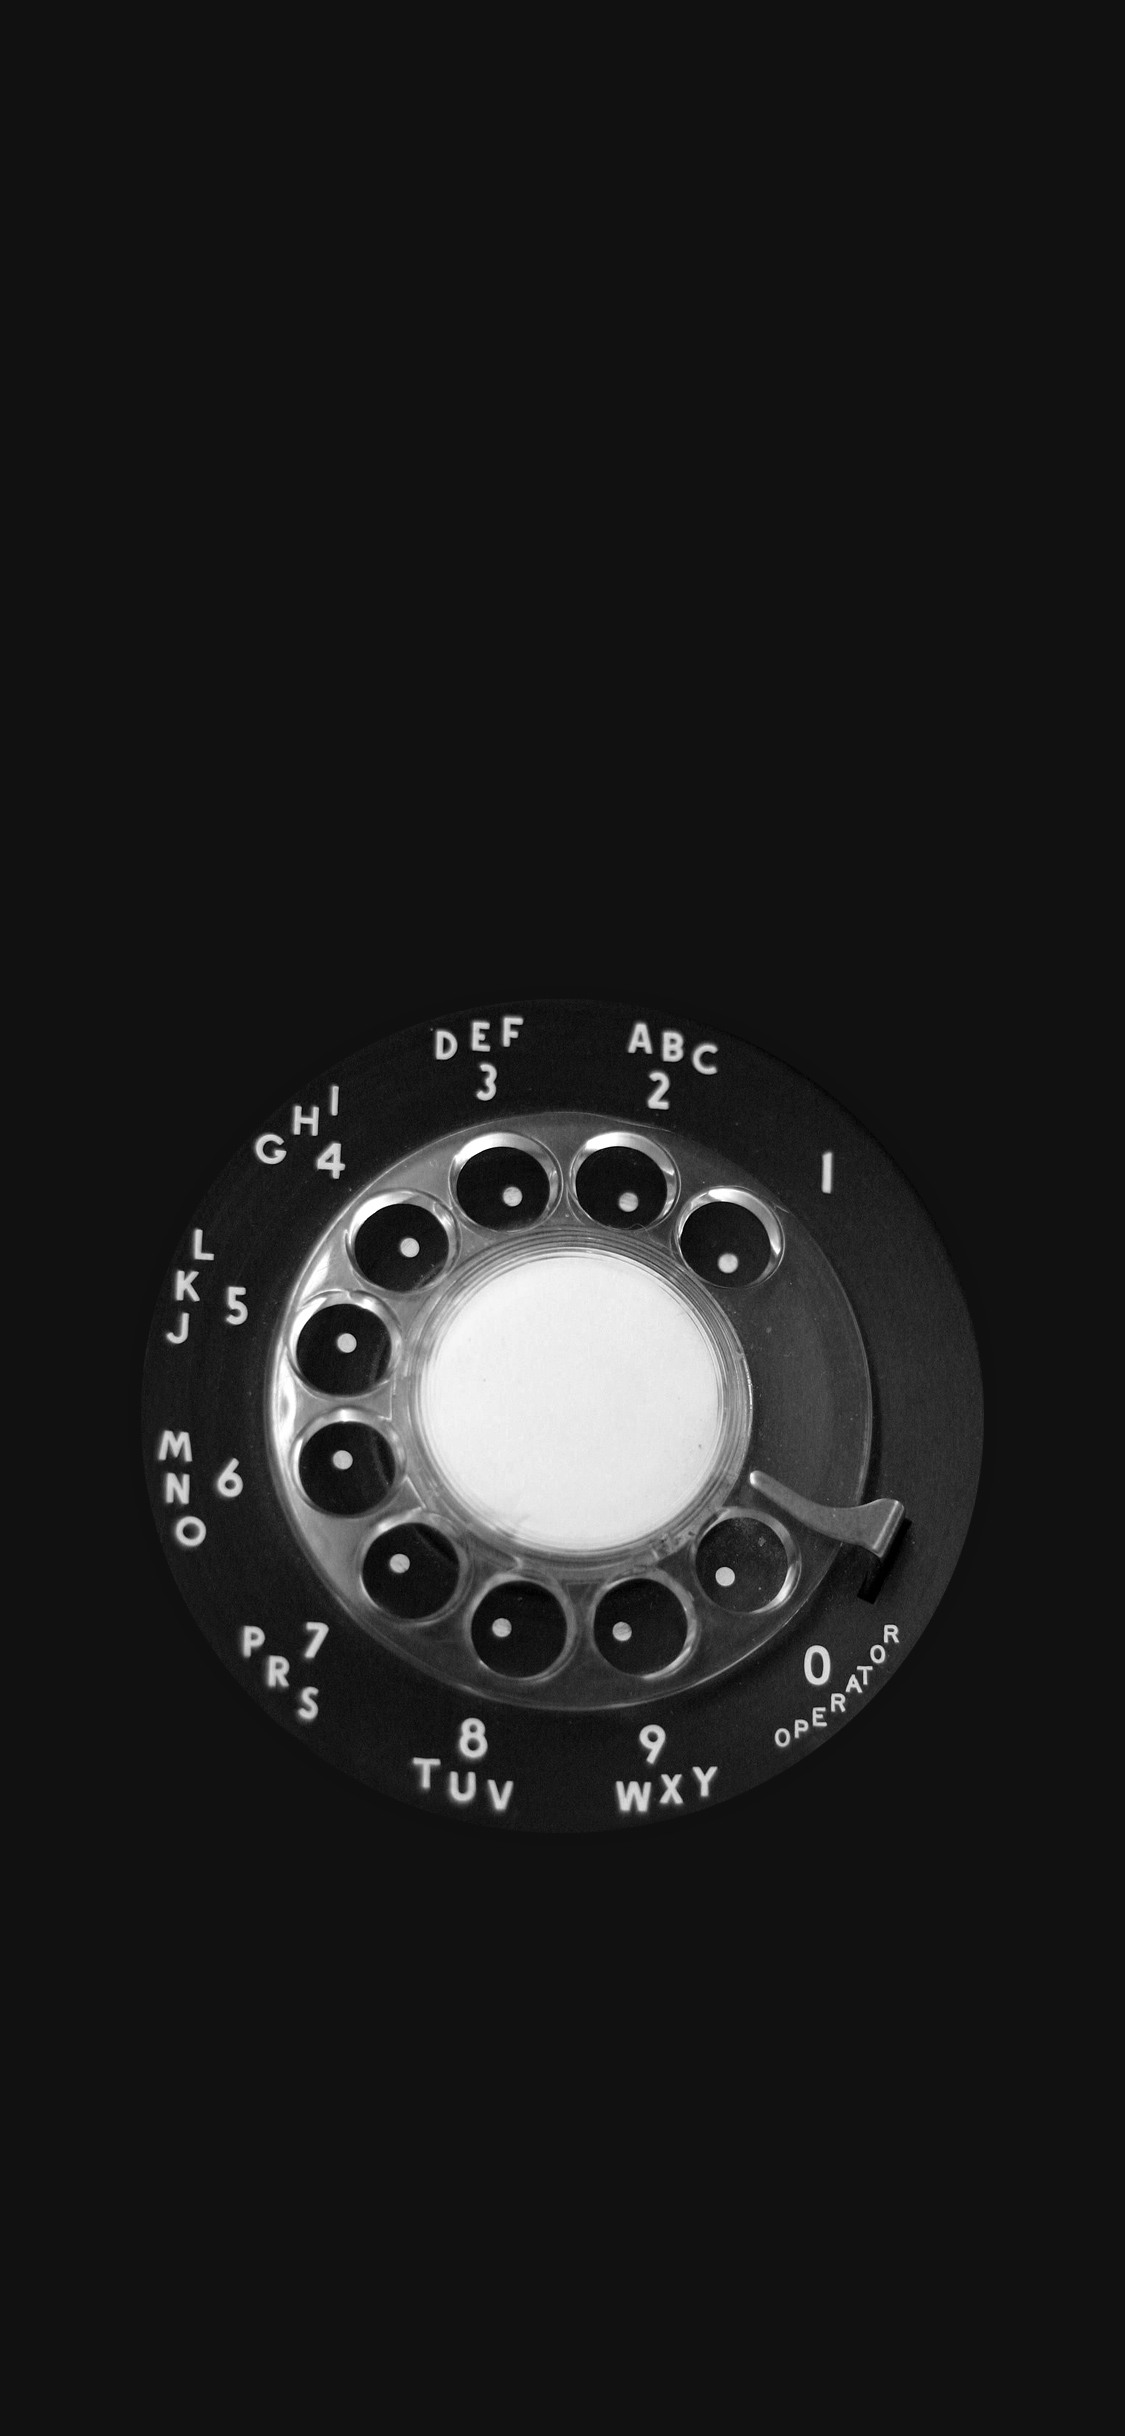 phone wallpaper displaying rotary phone